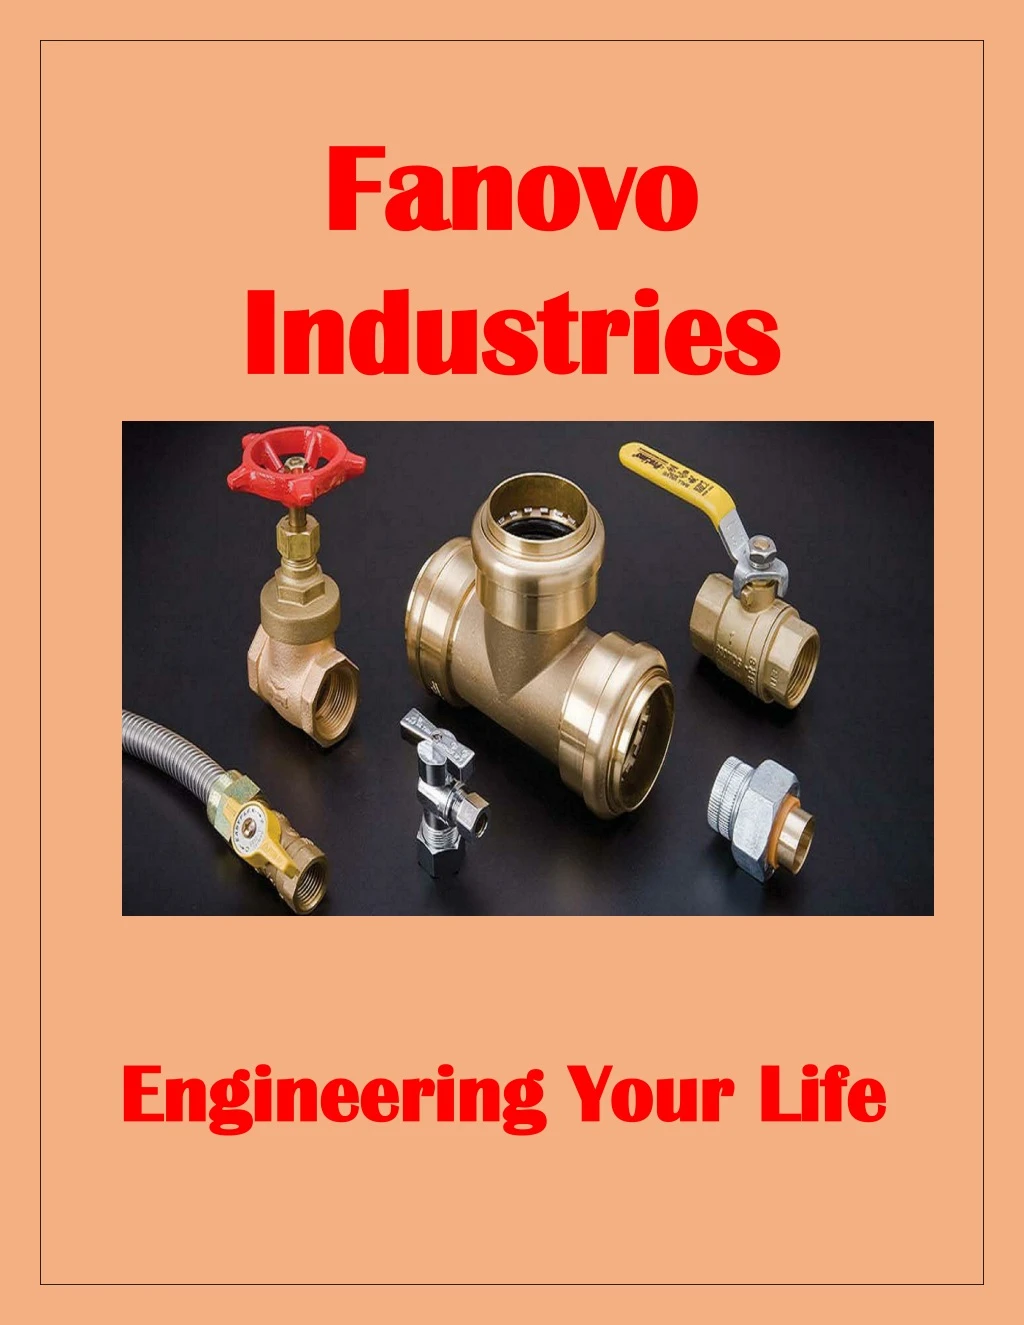 fanovo fanovo industries industries